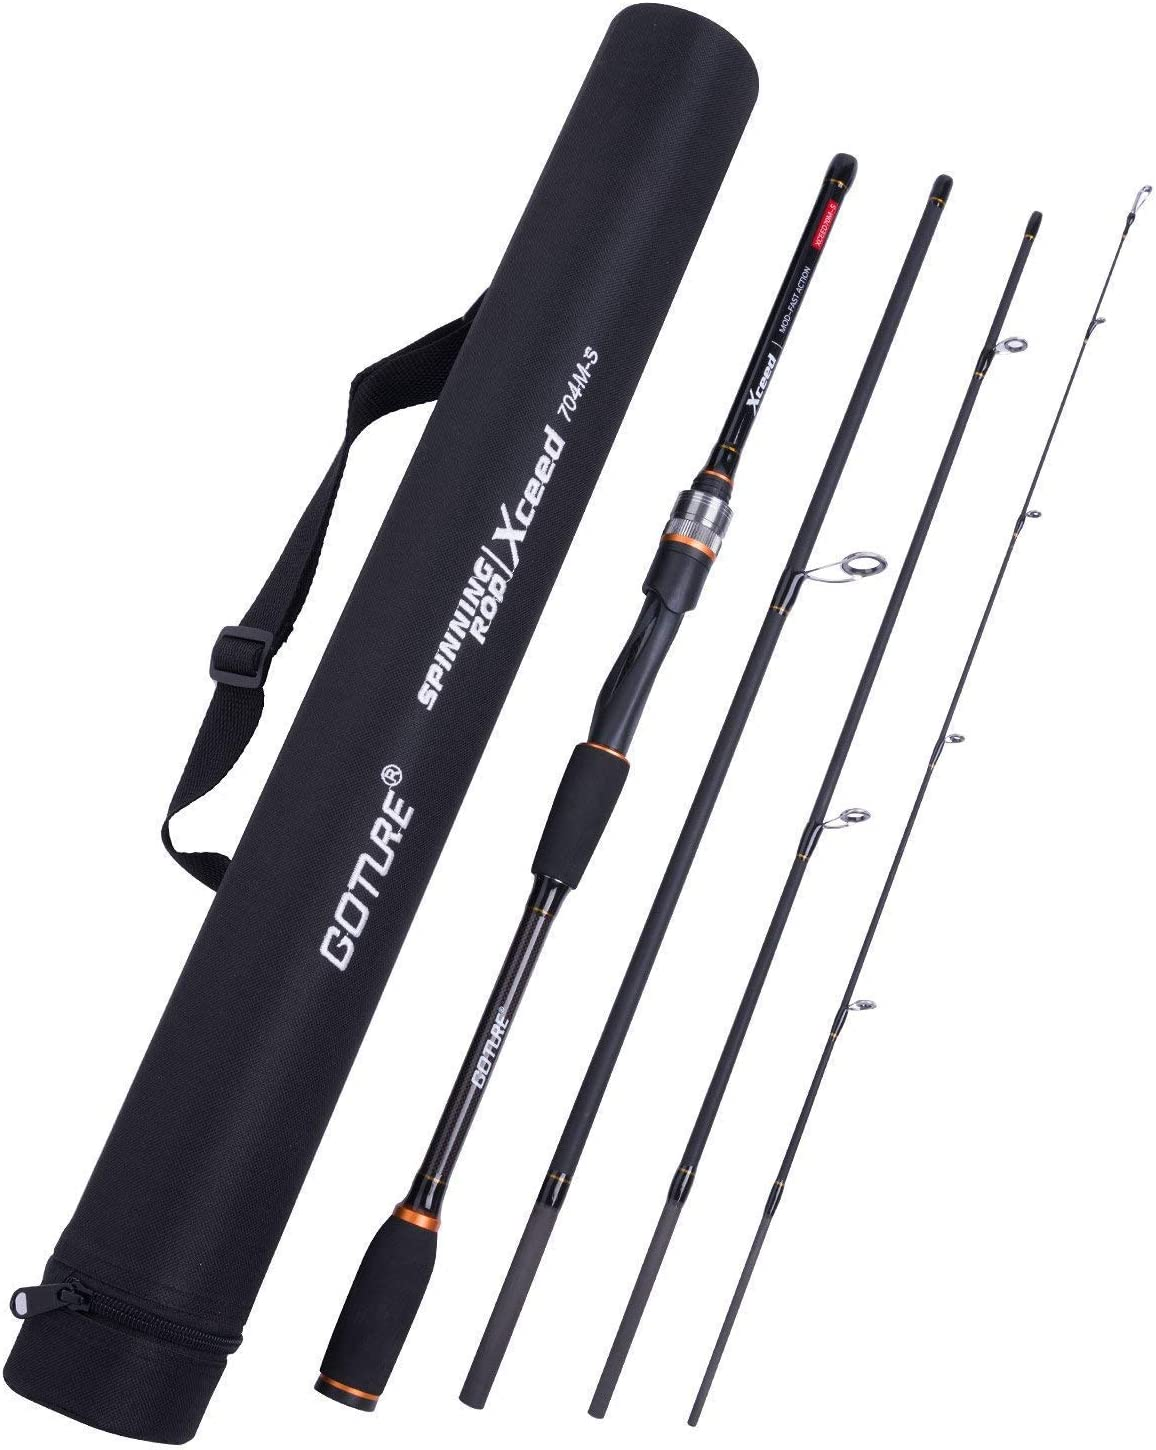 Goture Travel Fishing Rods - Best Versatile Casting Rod 